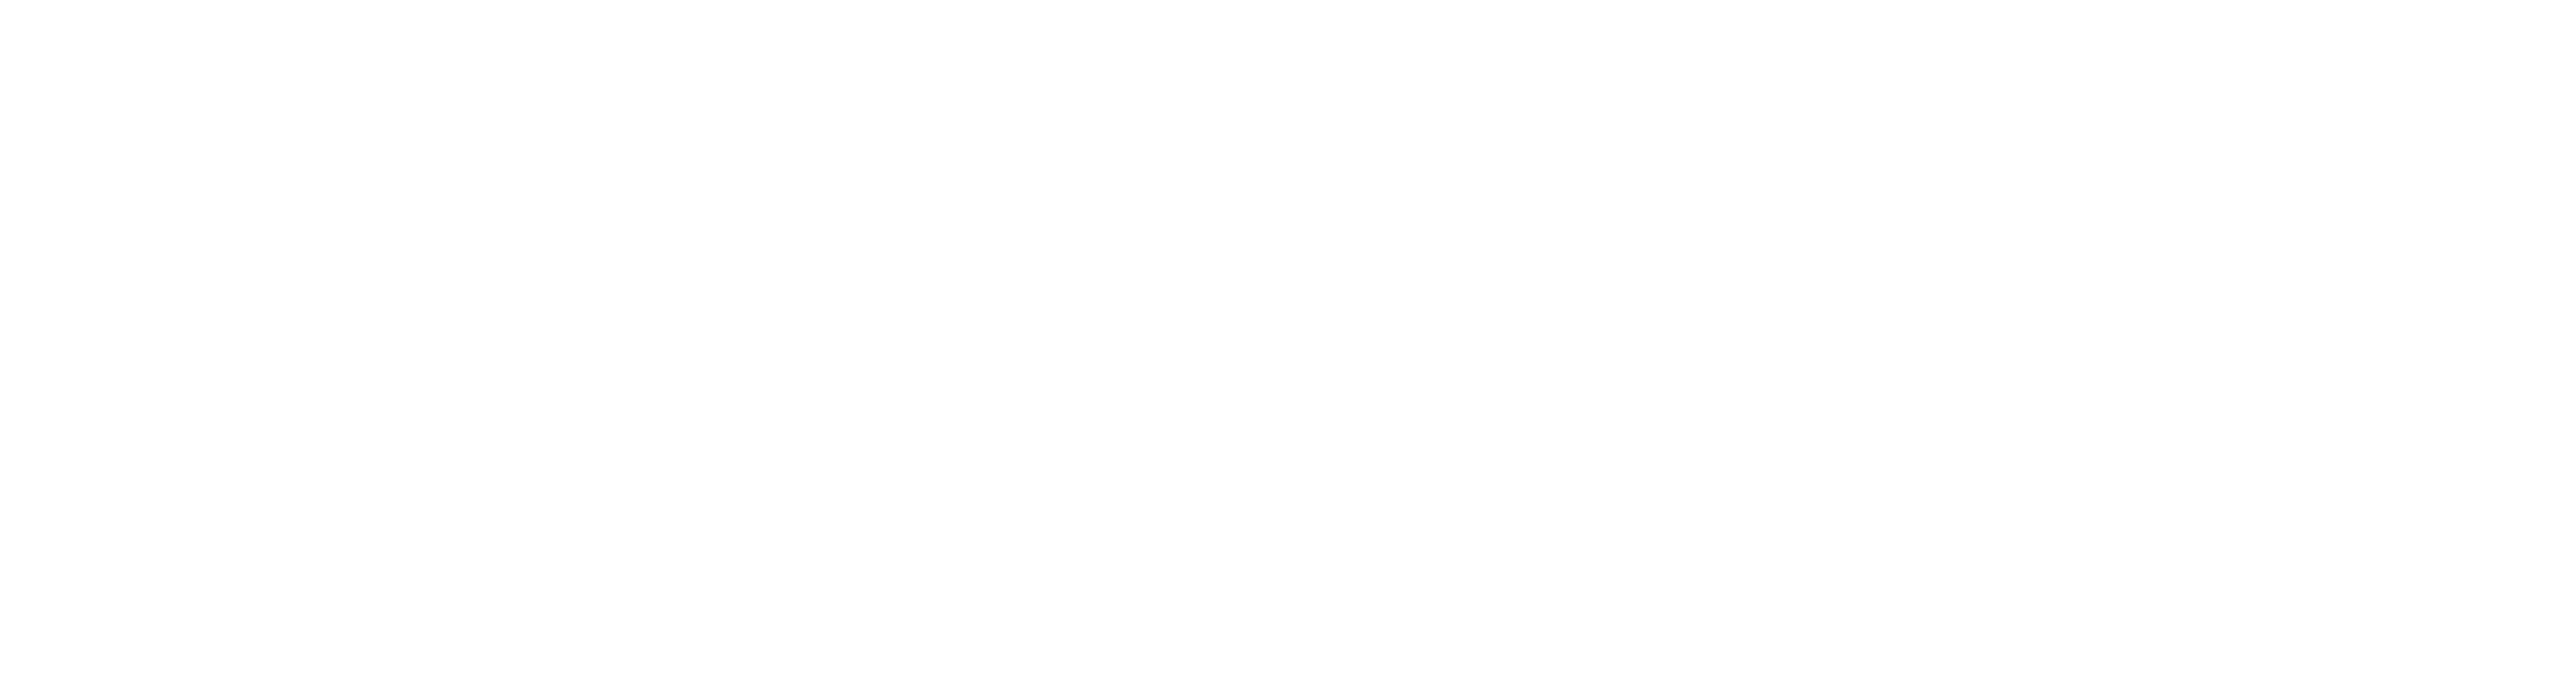 Prosper-Hotels-Logo-White